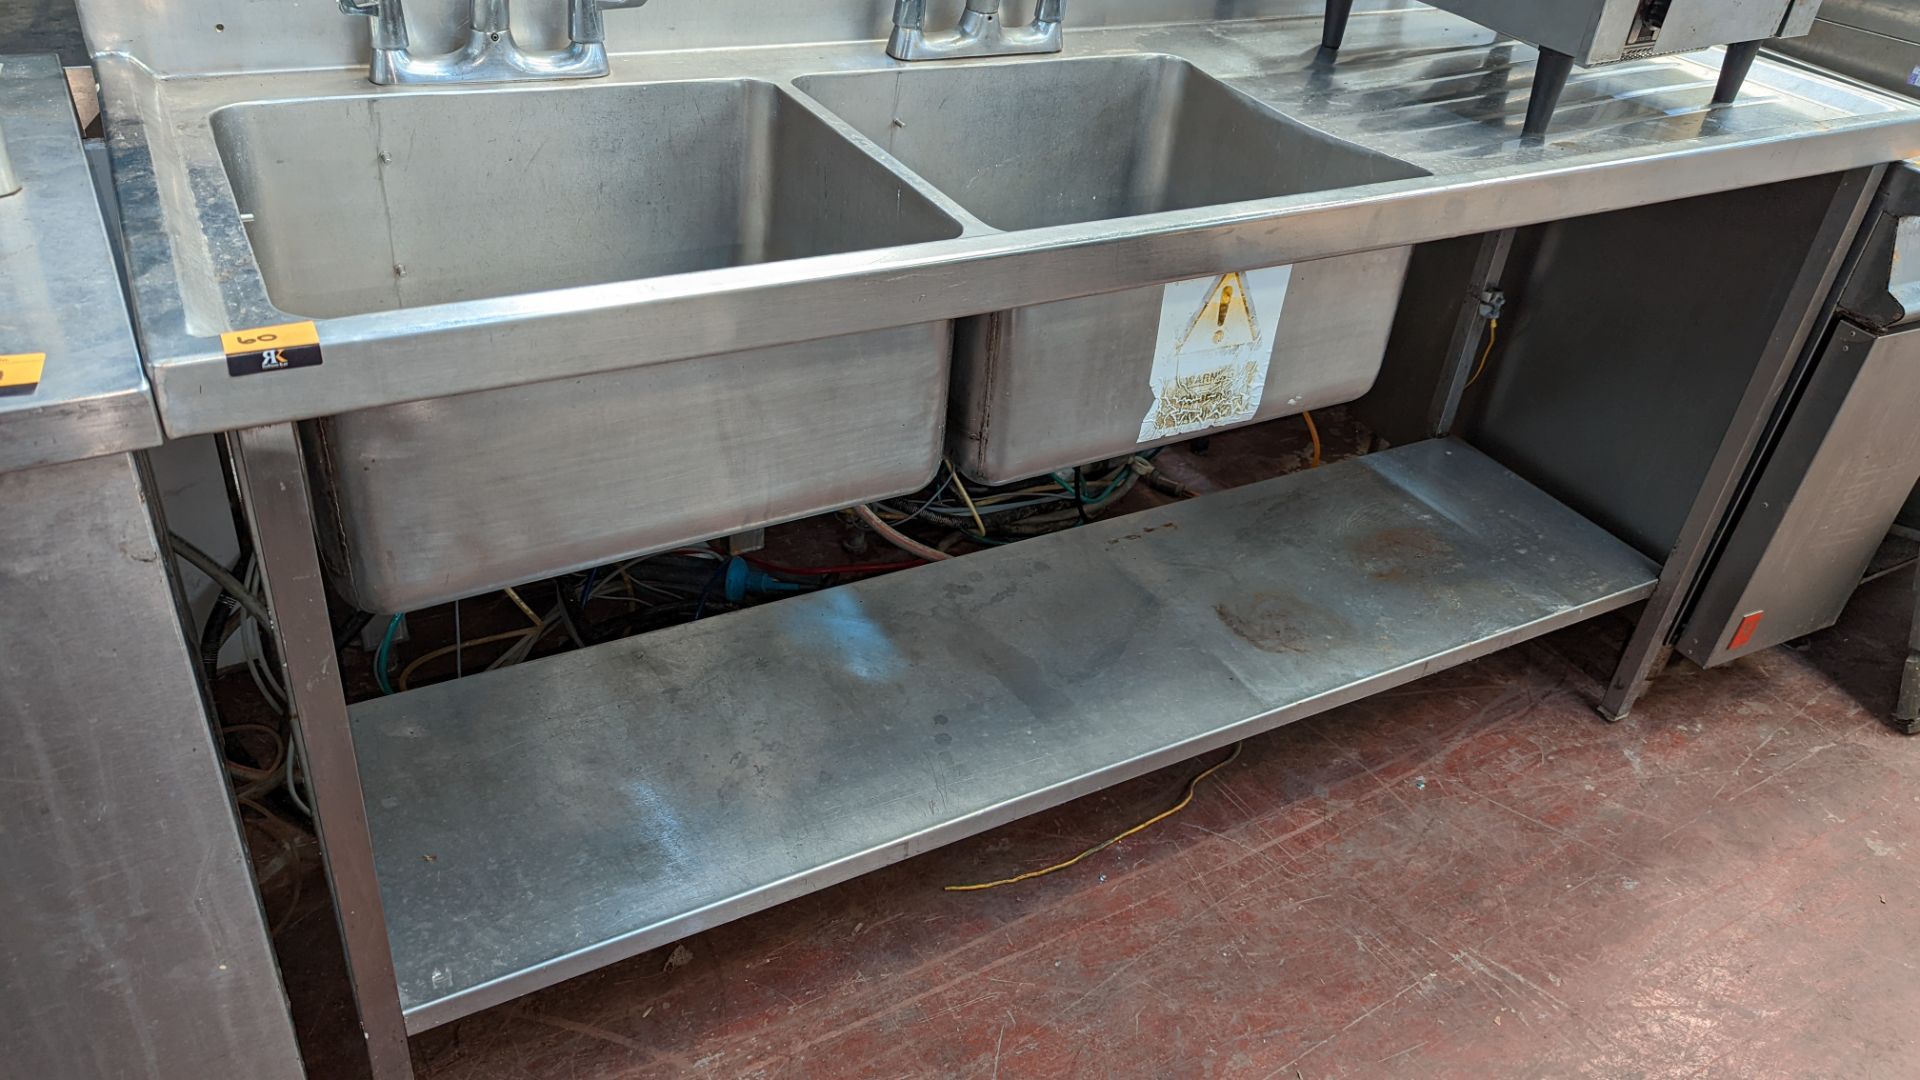 Stainless steel twin bowl sink arrangement incorporating mixer taps, drainer & shelf below